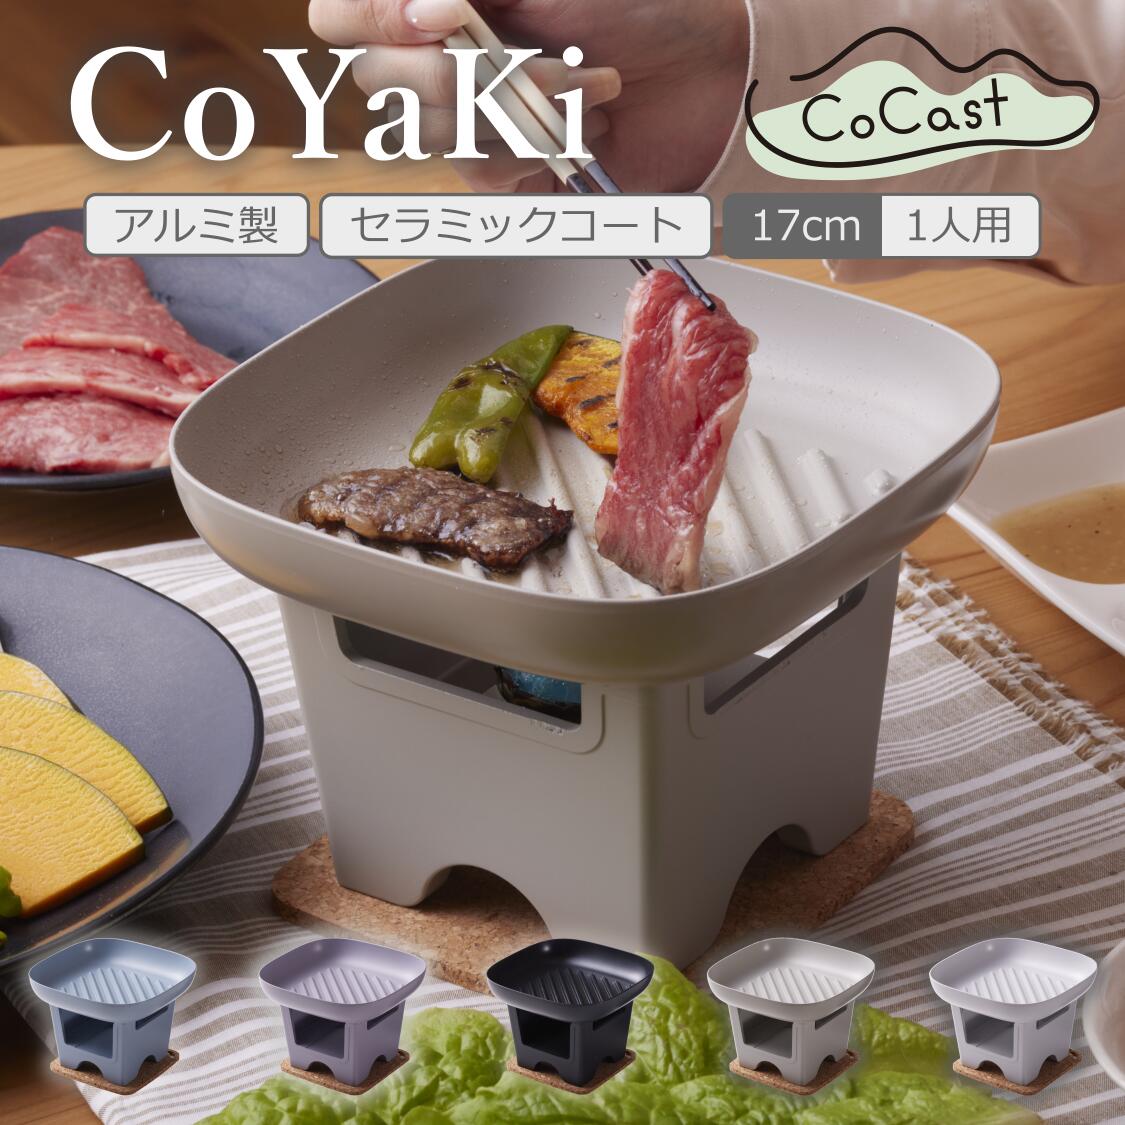 CoYaKi 卓上グリルプレート 固形燃料 直火 オーブン トースター 17cm 全5色 アルミ製 セラミックコーティング CoCast